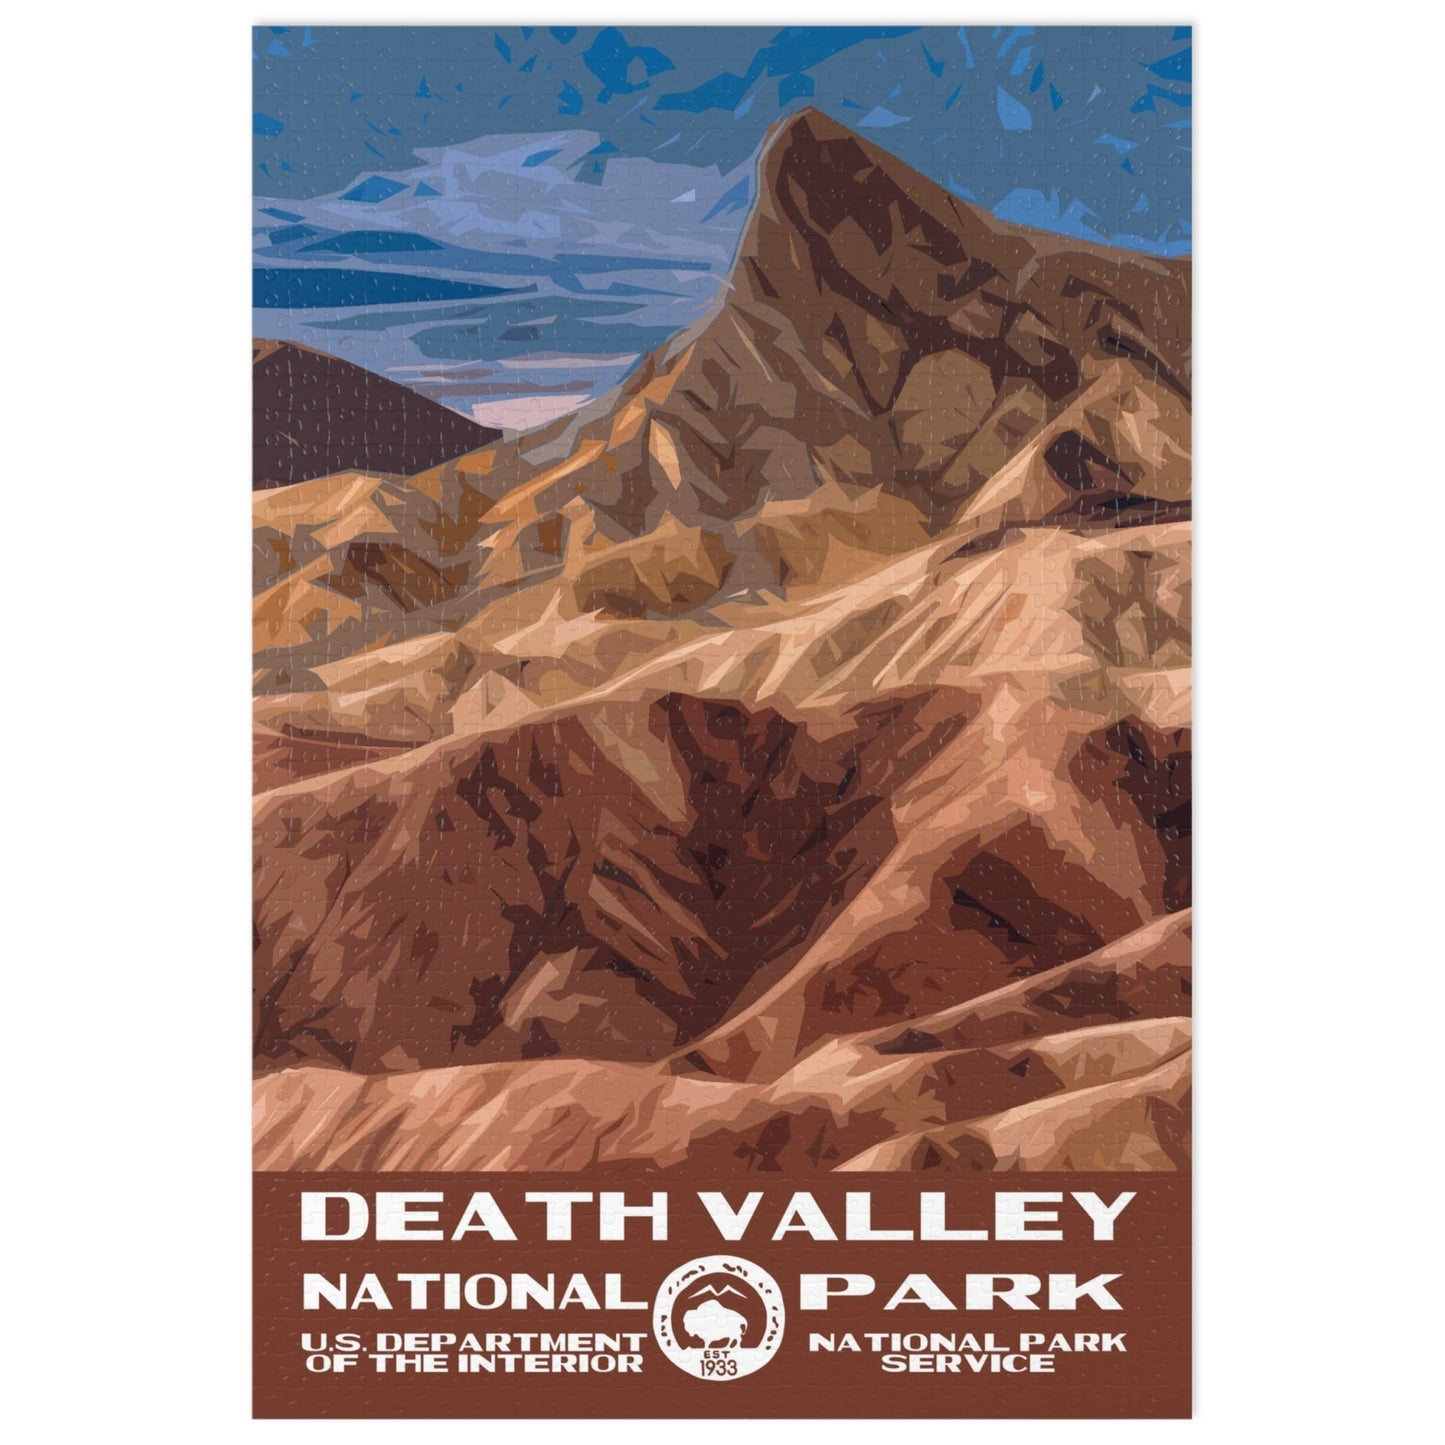 Death Valley National Park Jigsaw Puzzle - Zabriskie Point - 1000 Pieces